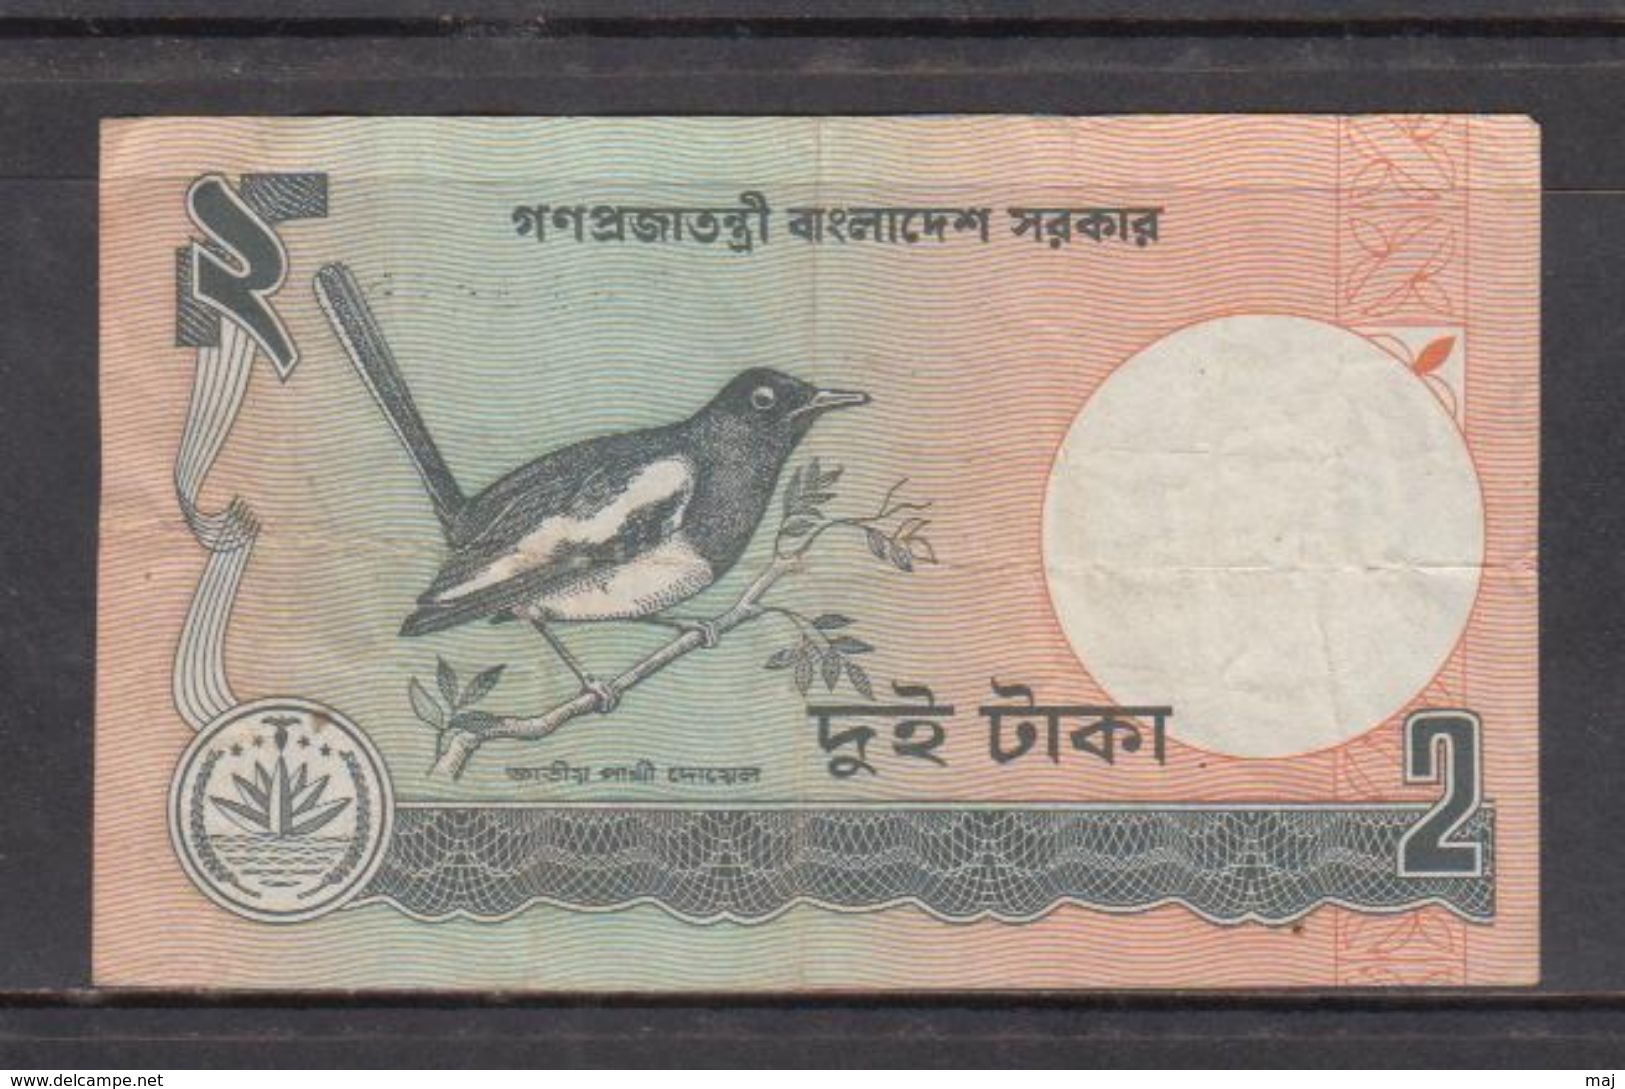 BANGLADESH 2 Taka Note Old Issue Bird, CONDITION:  As Per Scan - Bangladesh